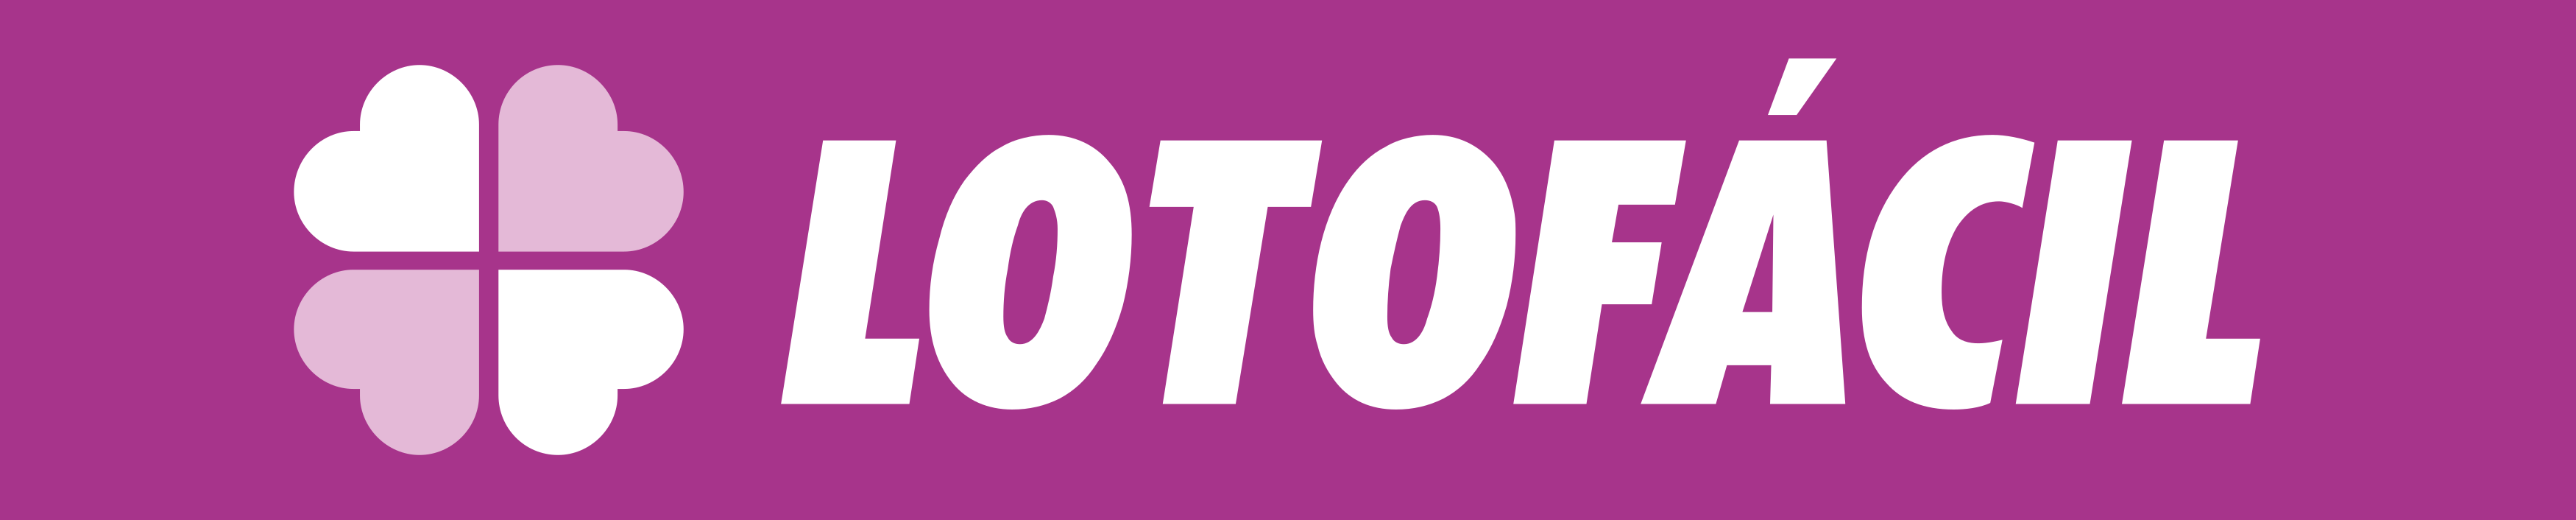 Lotofácil Logo.